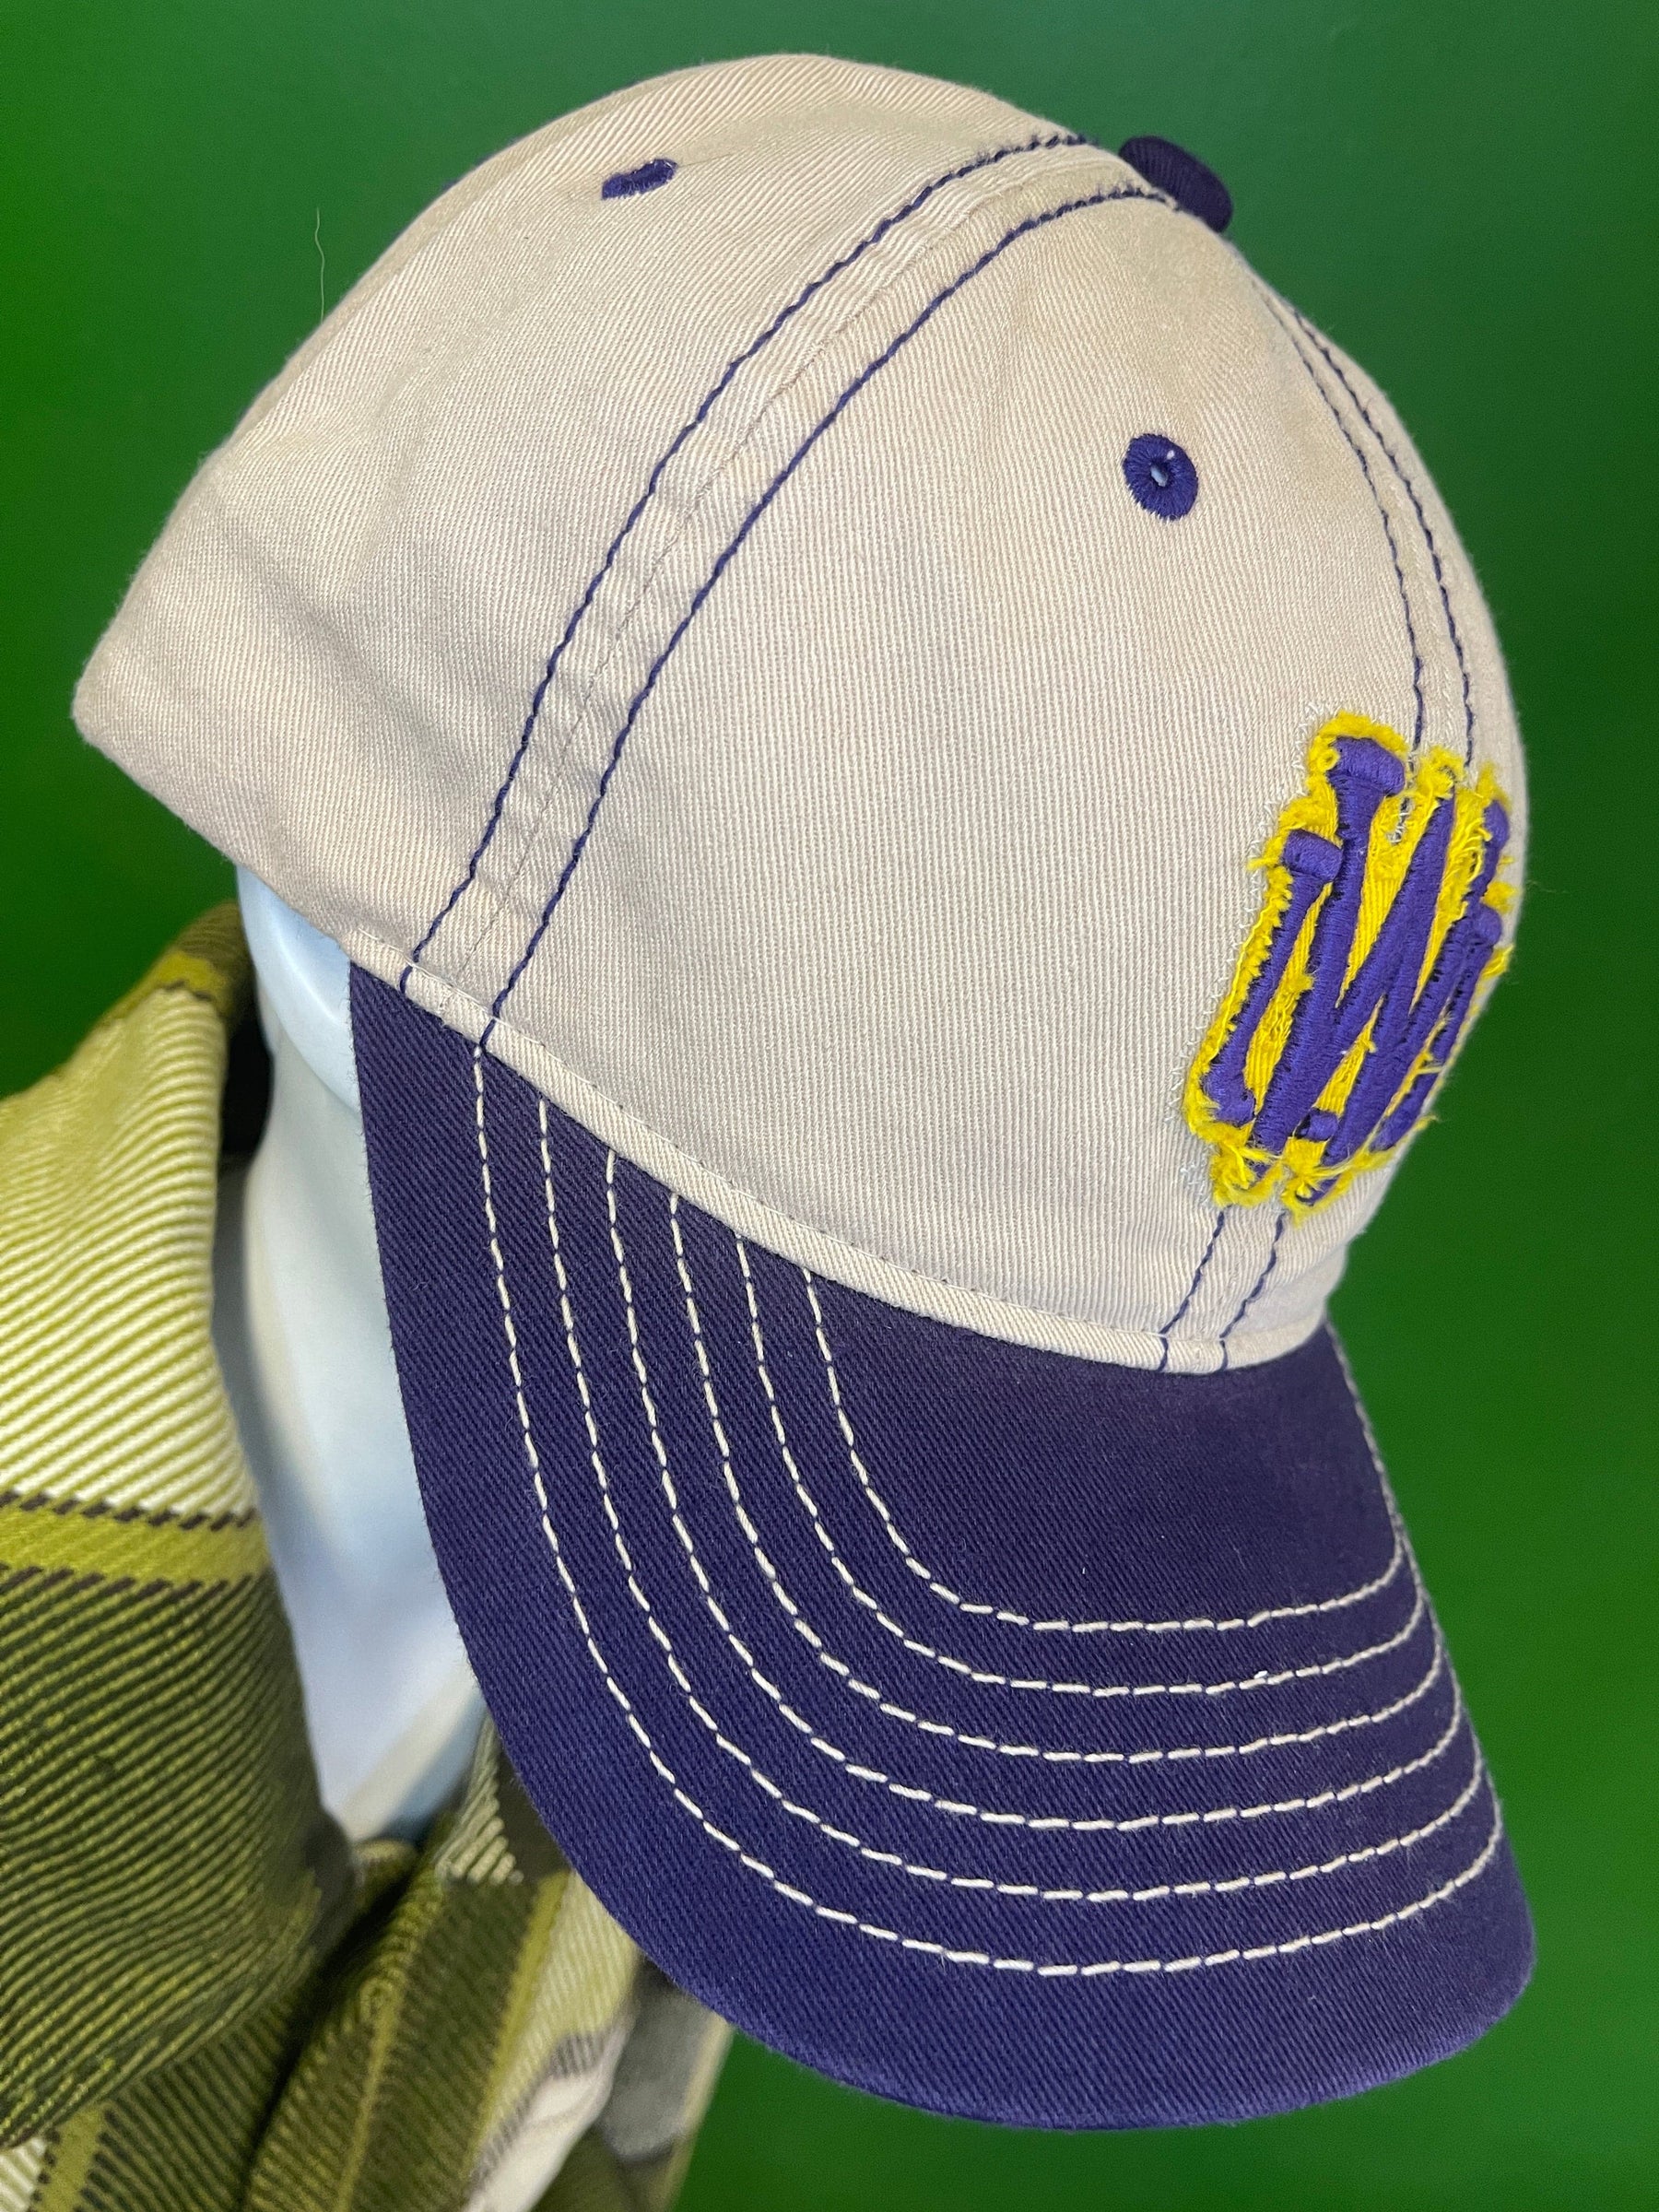 NCAA Washington Huskies Zephyr Distressed Strapback Hat/Cap OSFM NWT